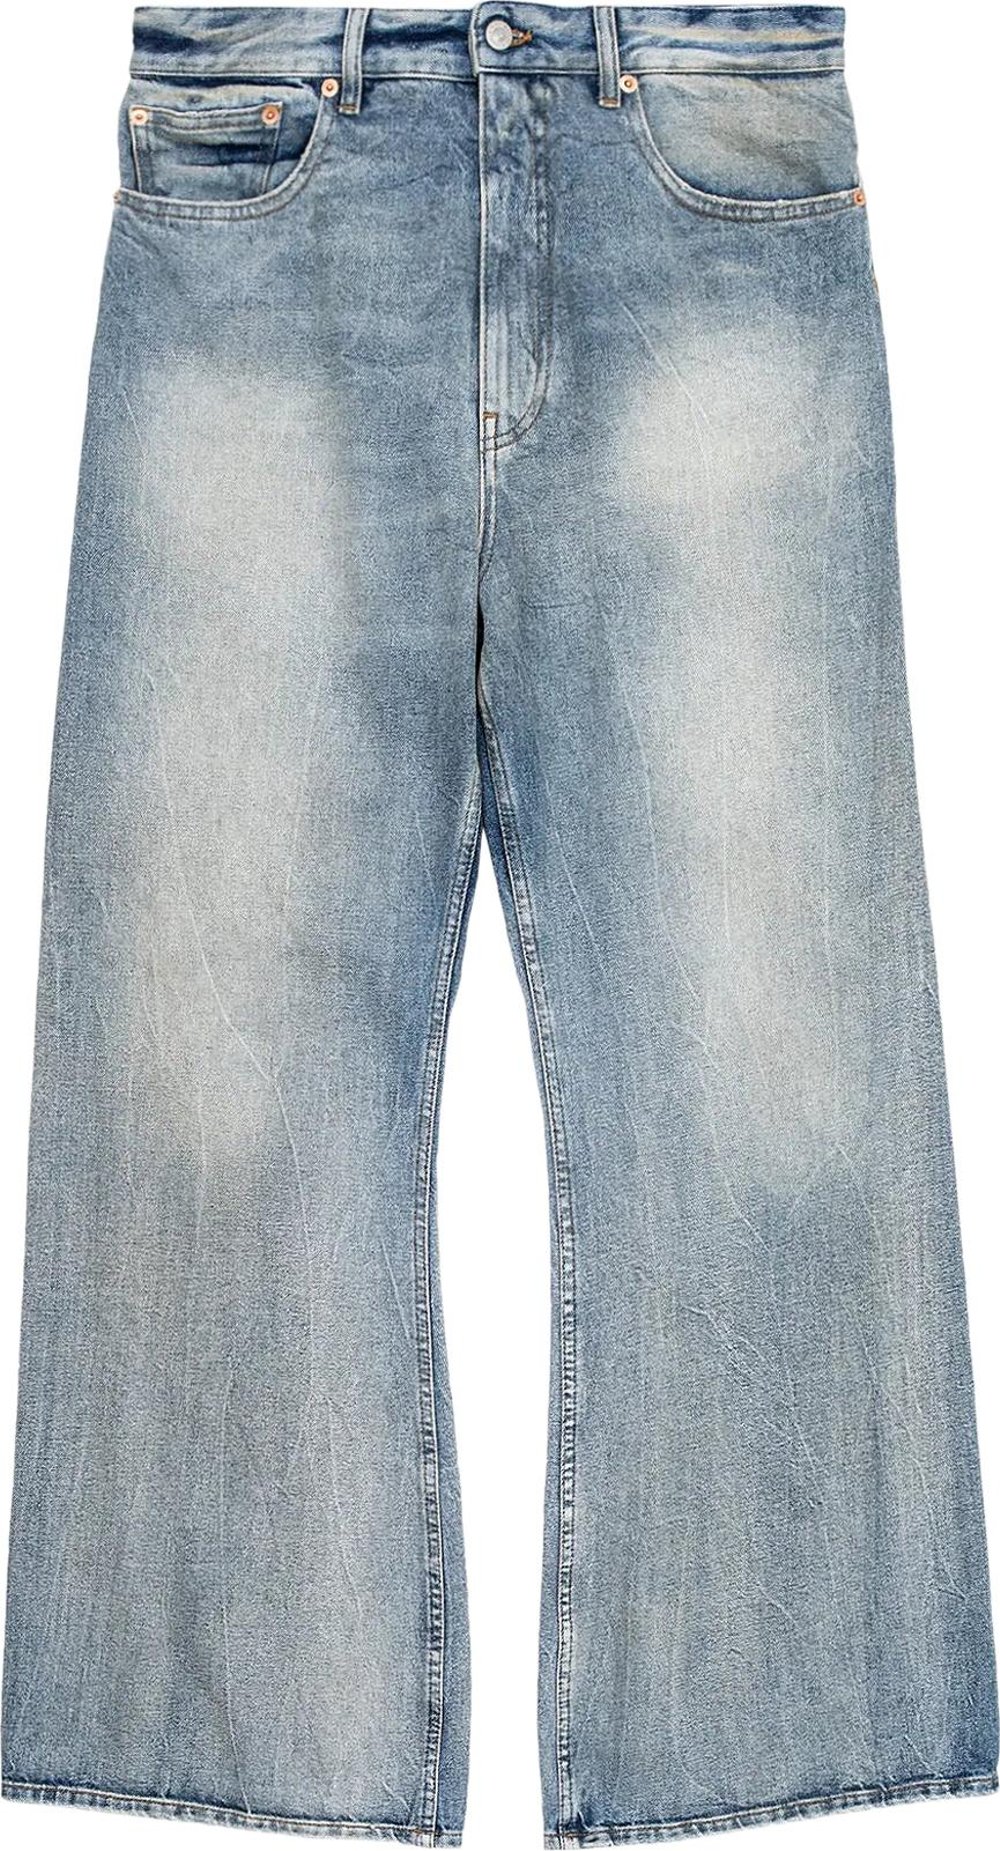 Buy MM6 Maison Margiela 5 Pocket Pants 'Bright Blue Spray' - S62LB0131 ...